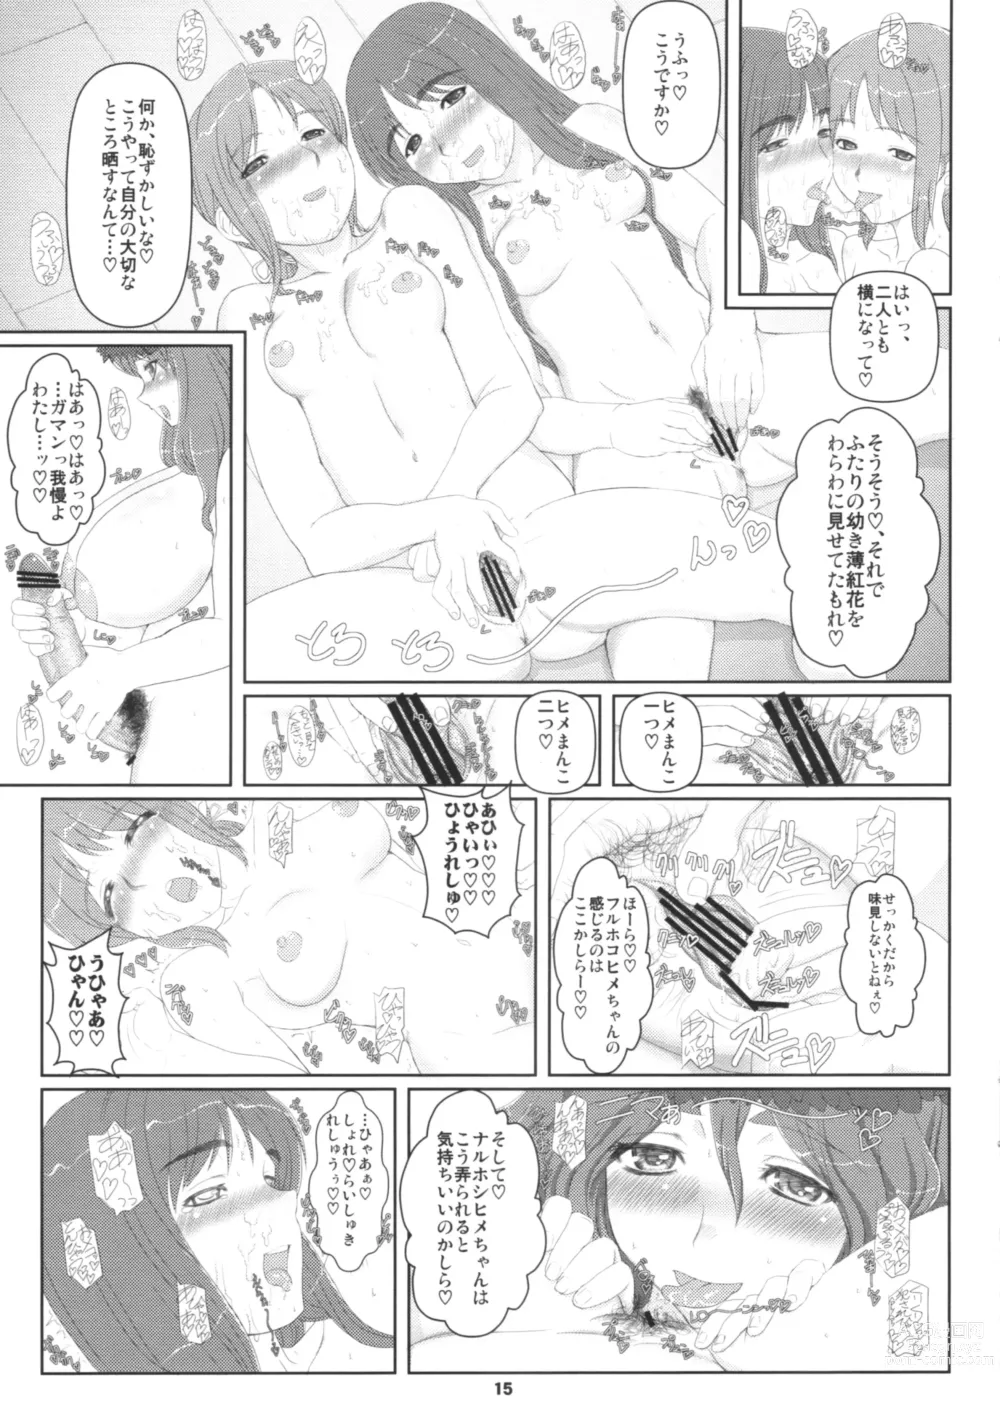 Page 14 of doujinshi Hime Awabi Hime Matsutake Sono 4-jou